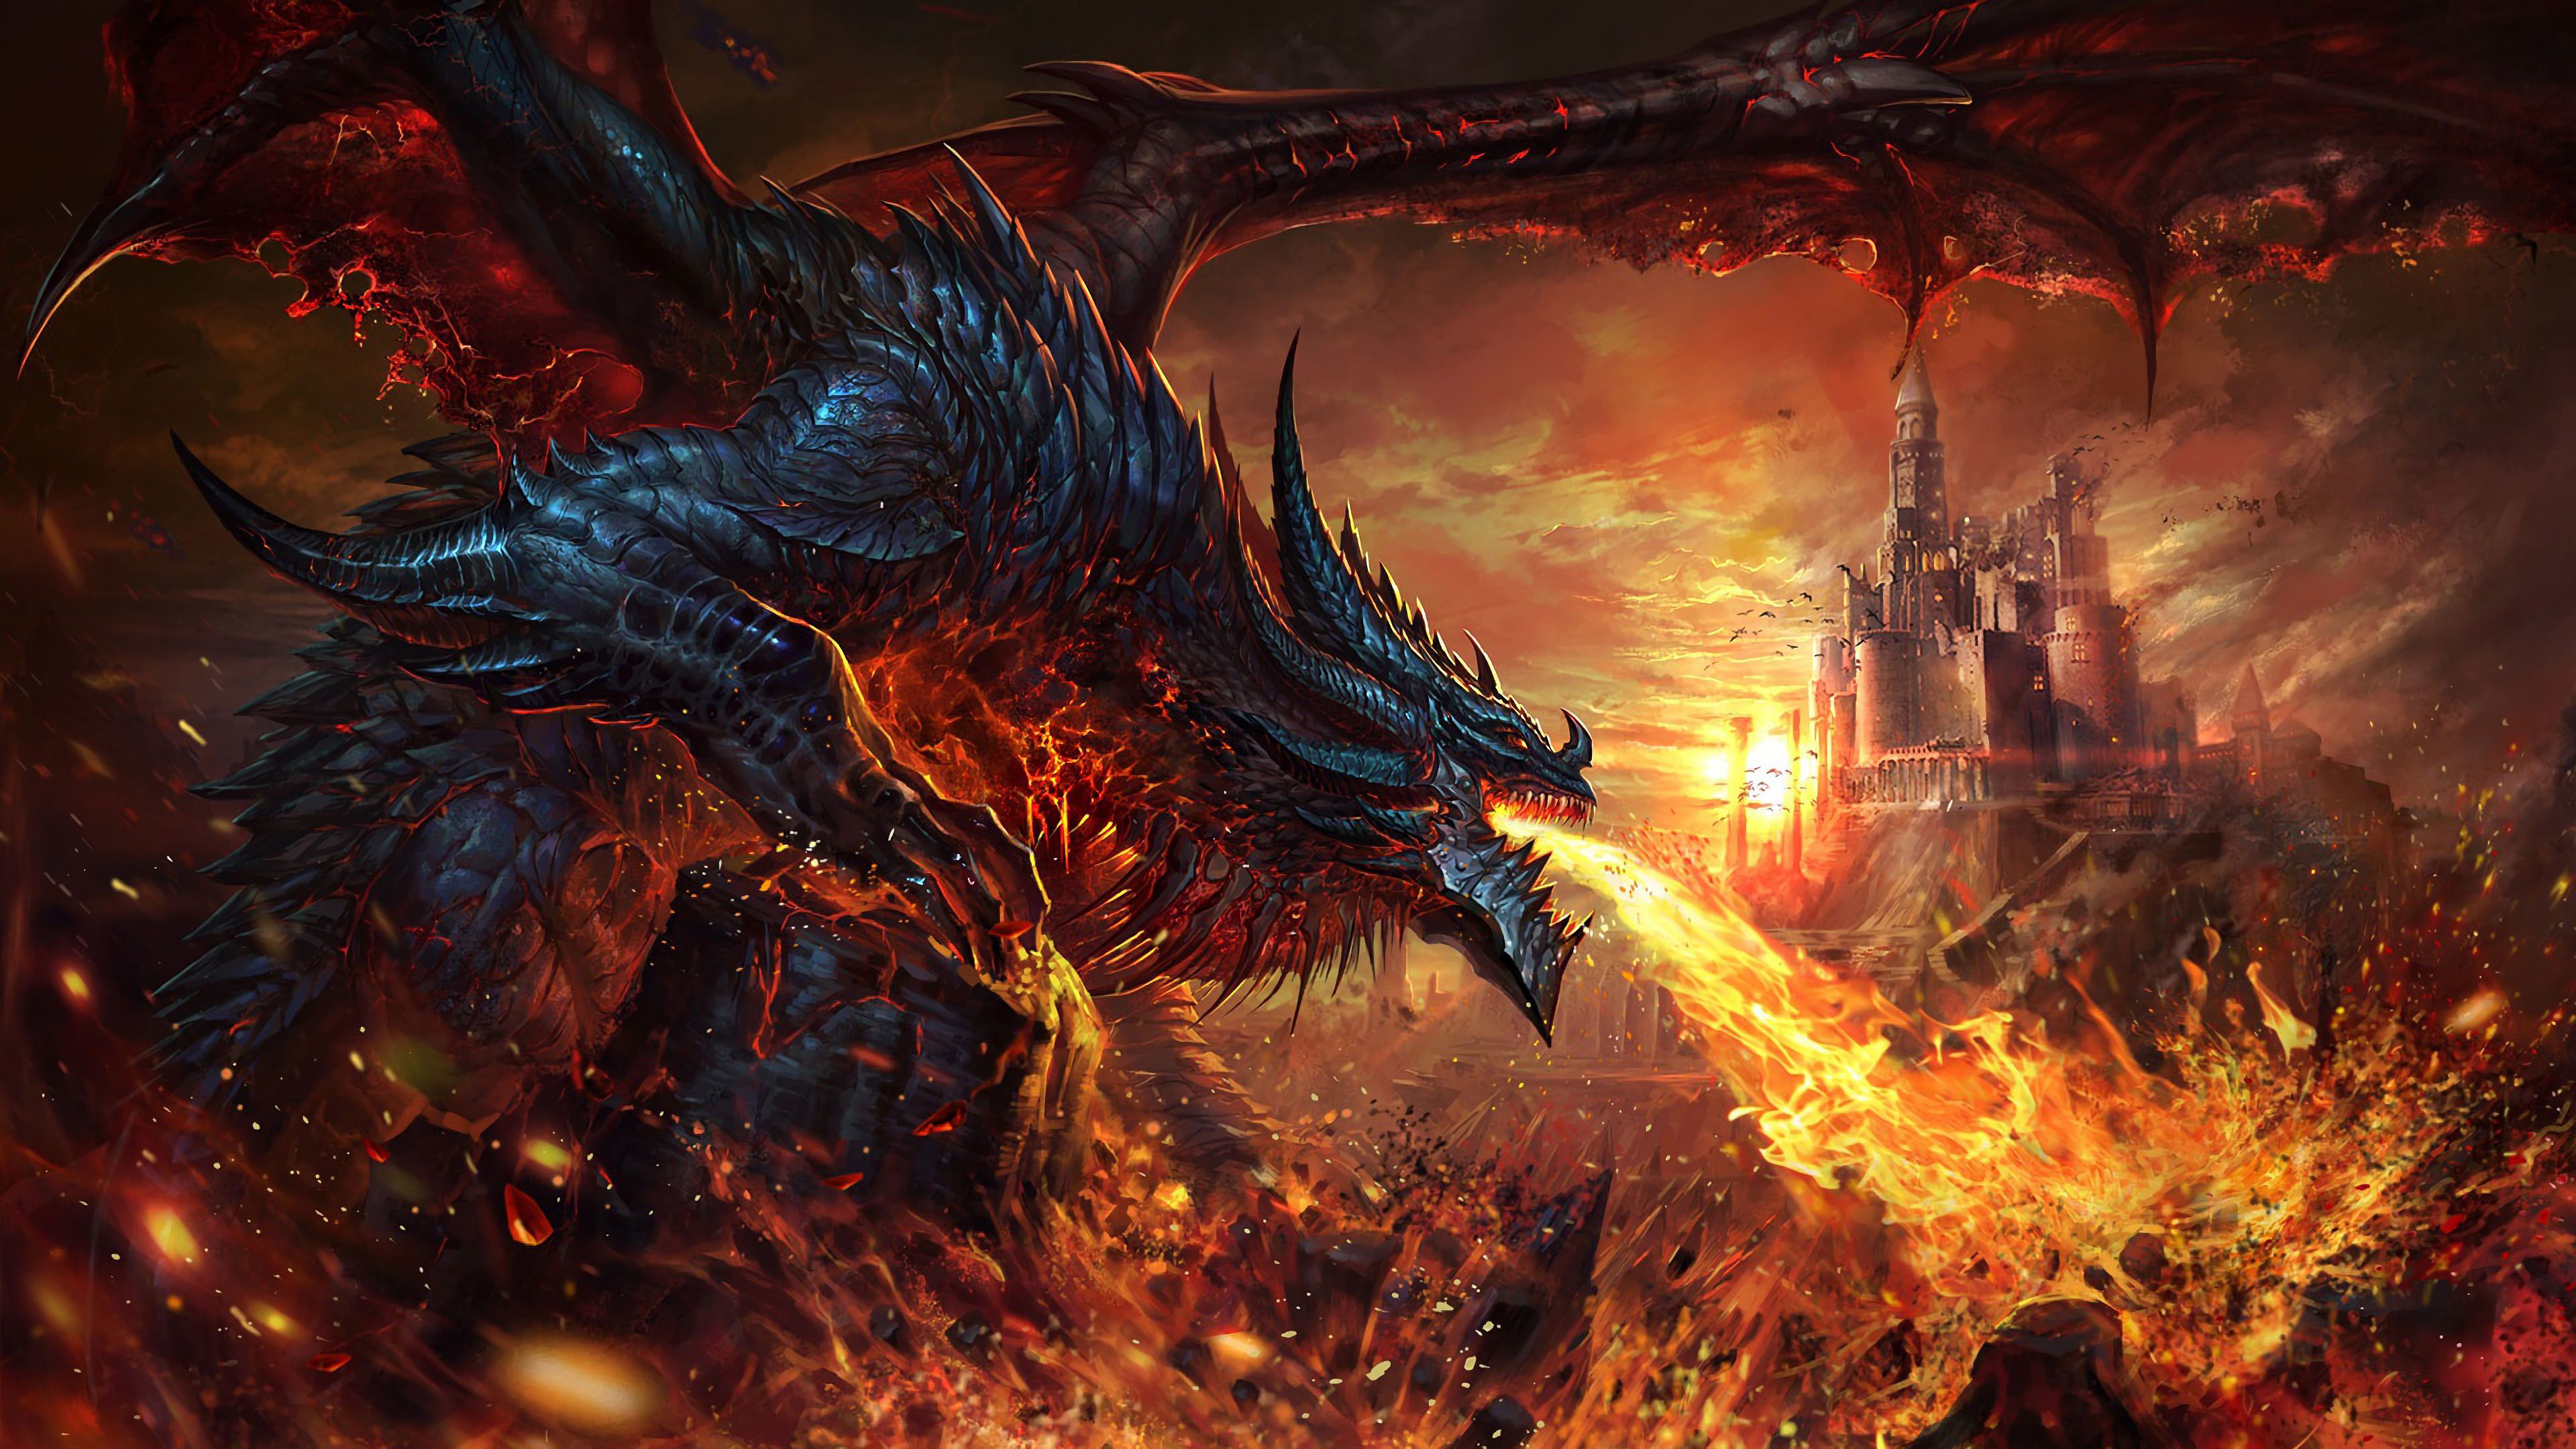 Dragon Fire Breath Fantasy 4K Wallpaper